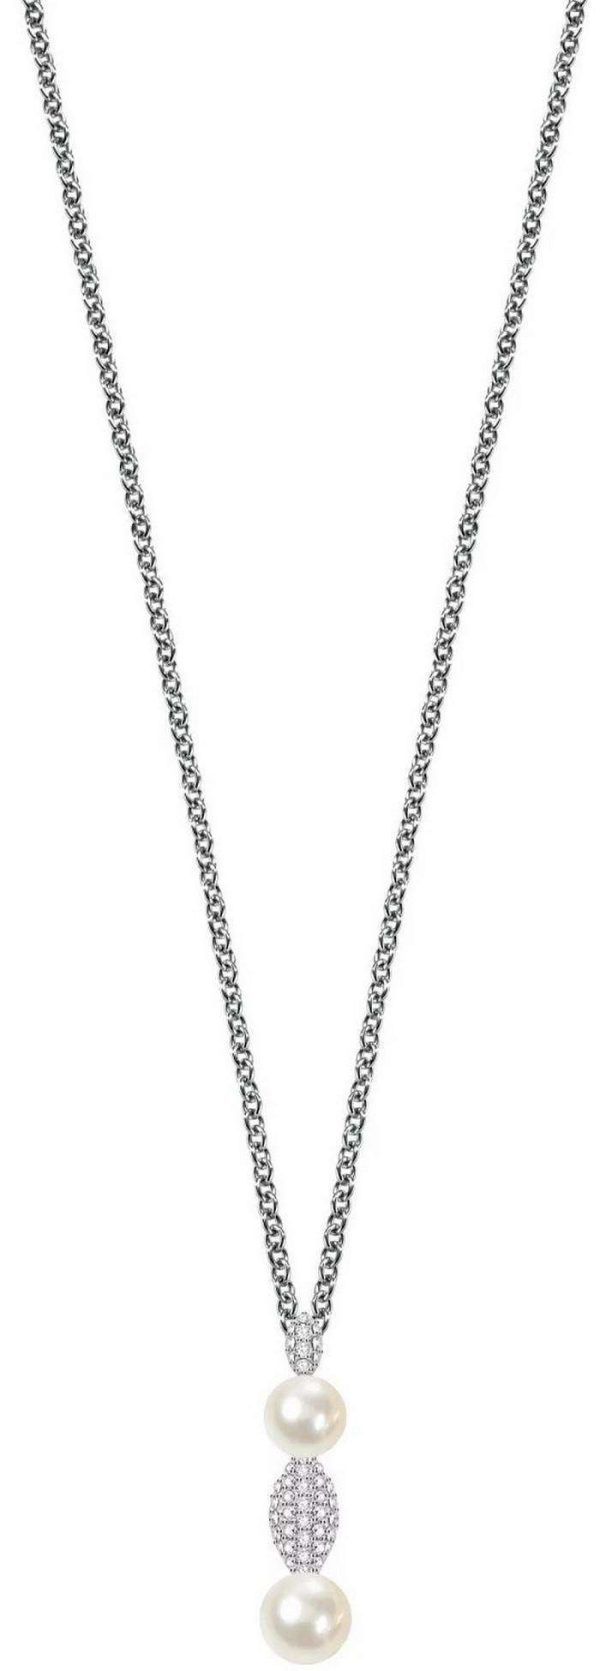 Morellato Perla Essenziale Collar de mujer SANH08 de plata esterlina